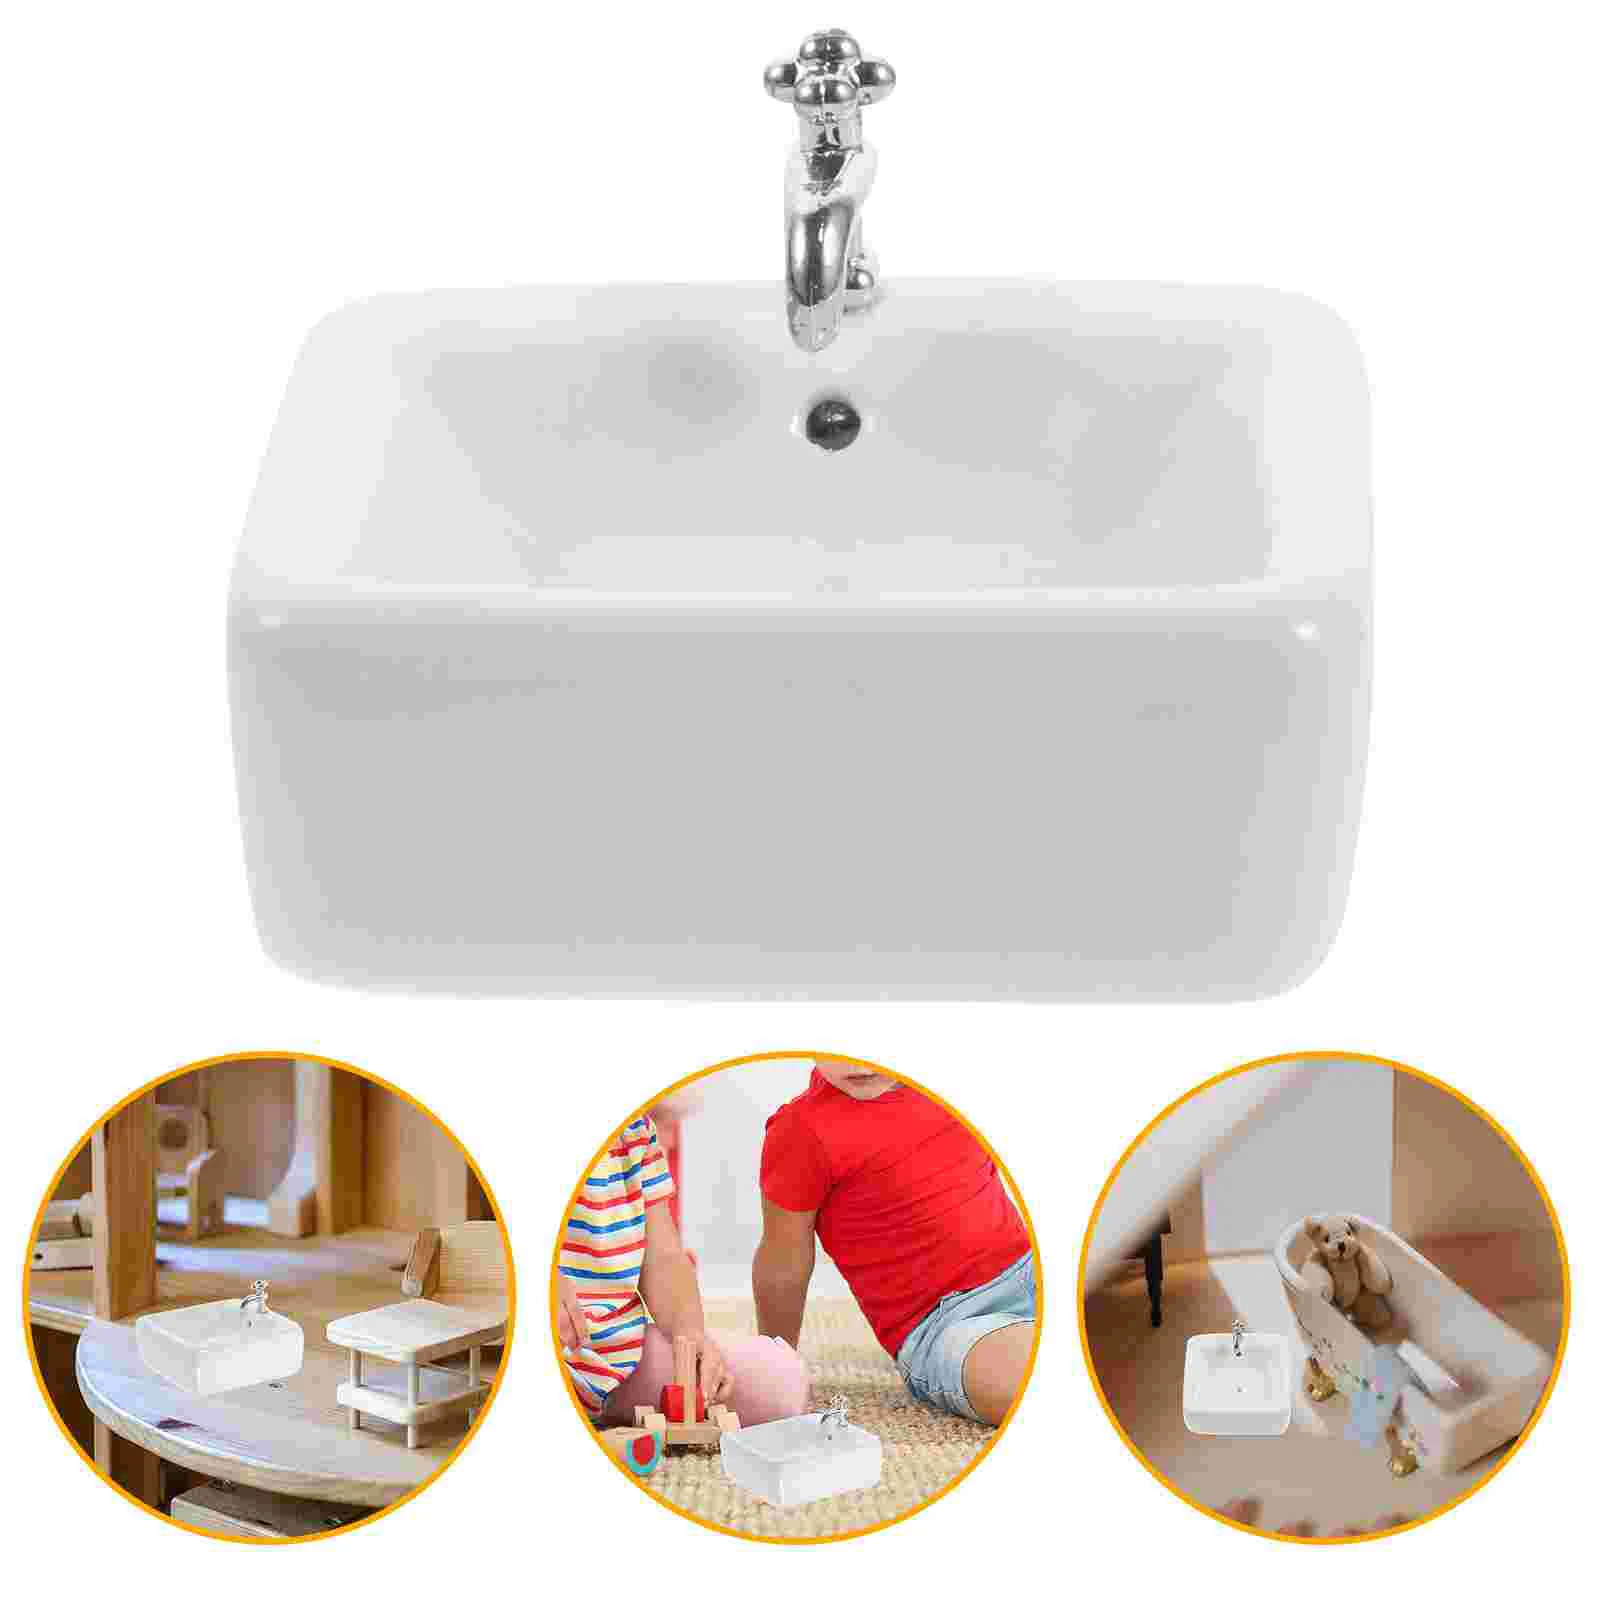 

Dollhouse Washbasin Miniature Bathroom Sink Ceramic Scene Layout Supplies Model